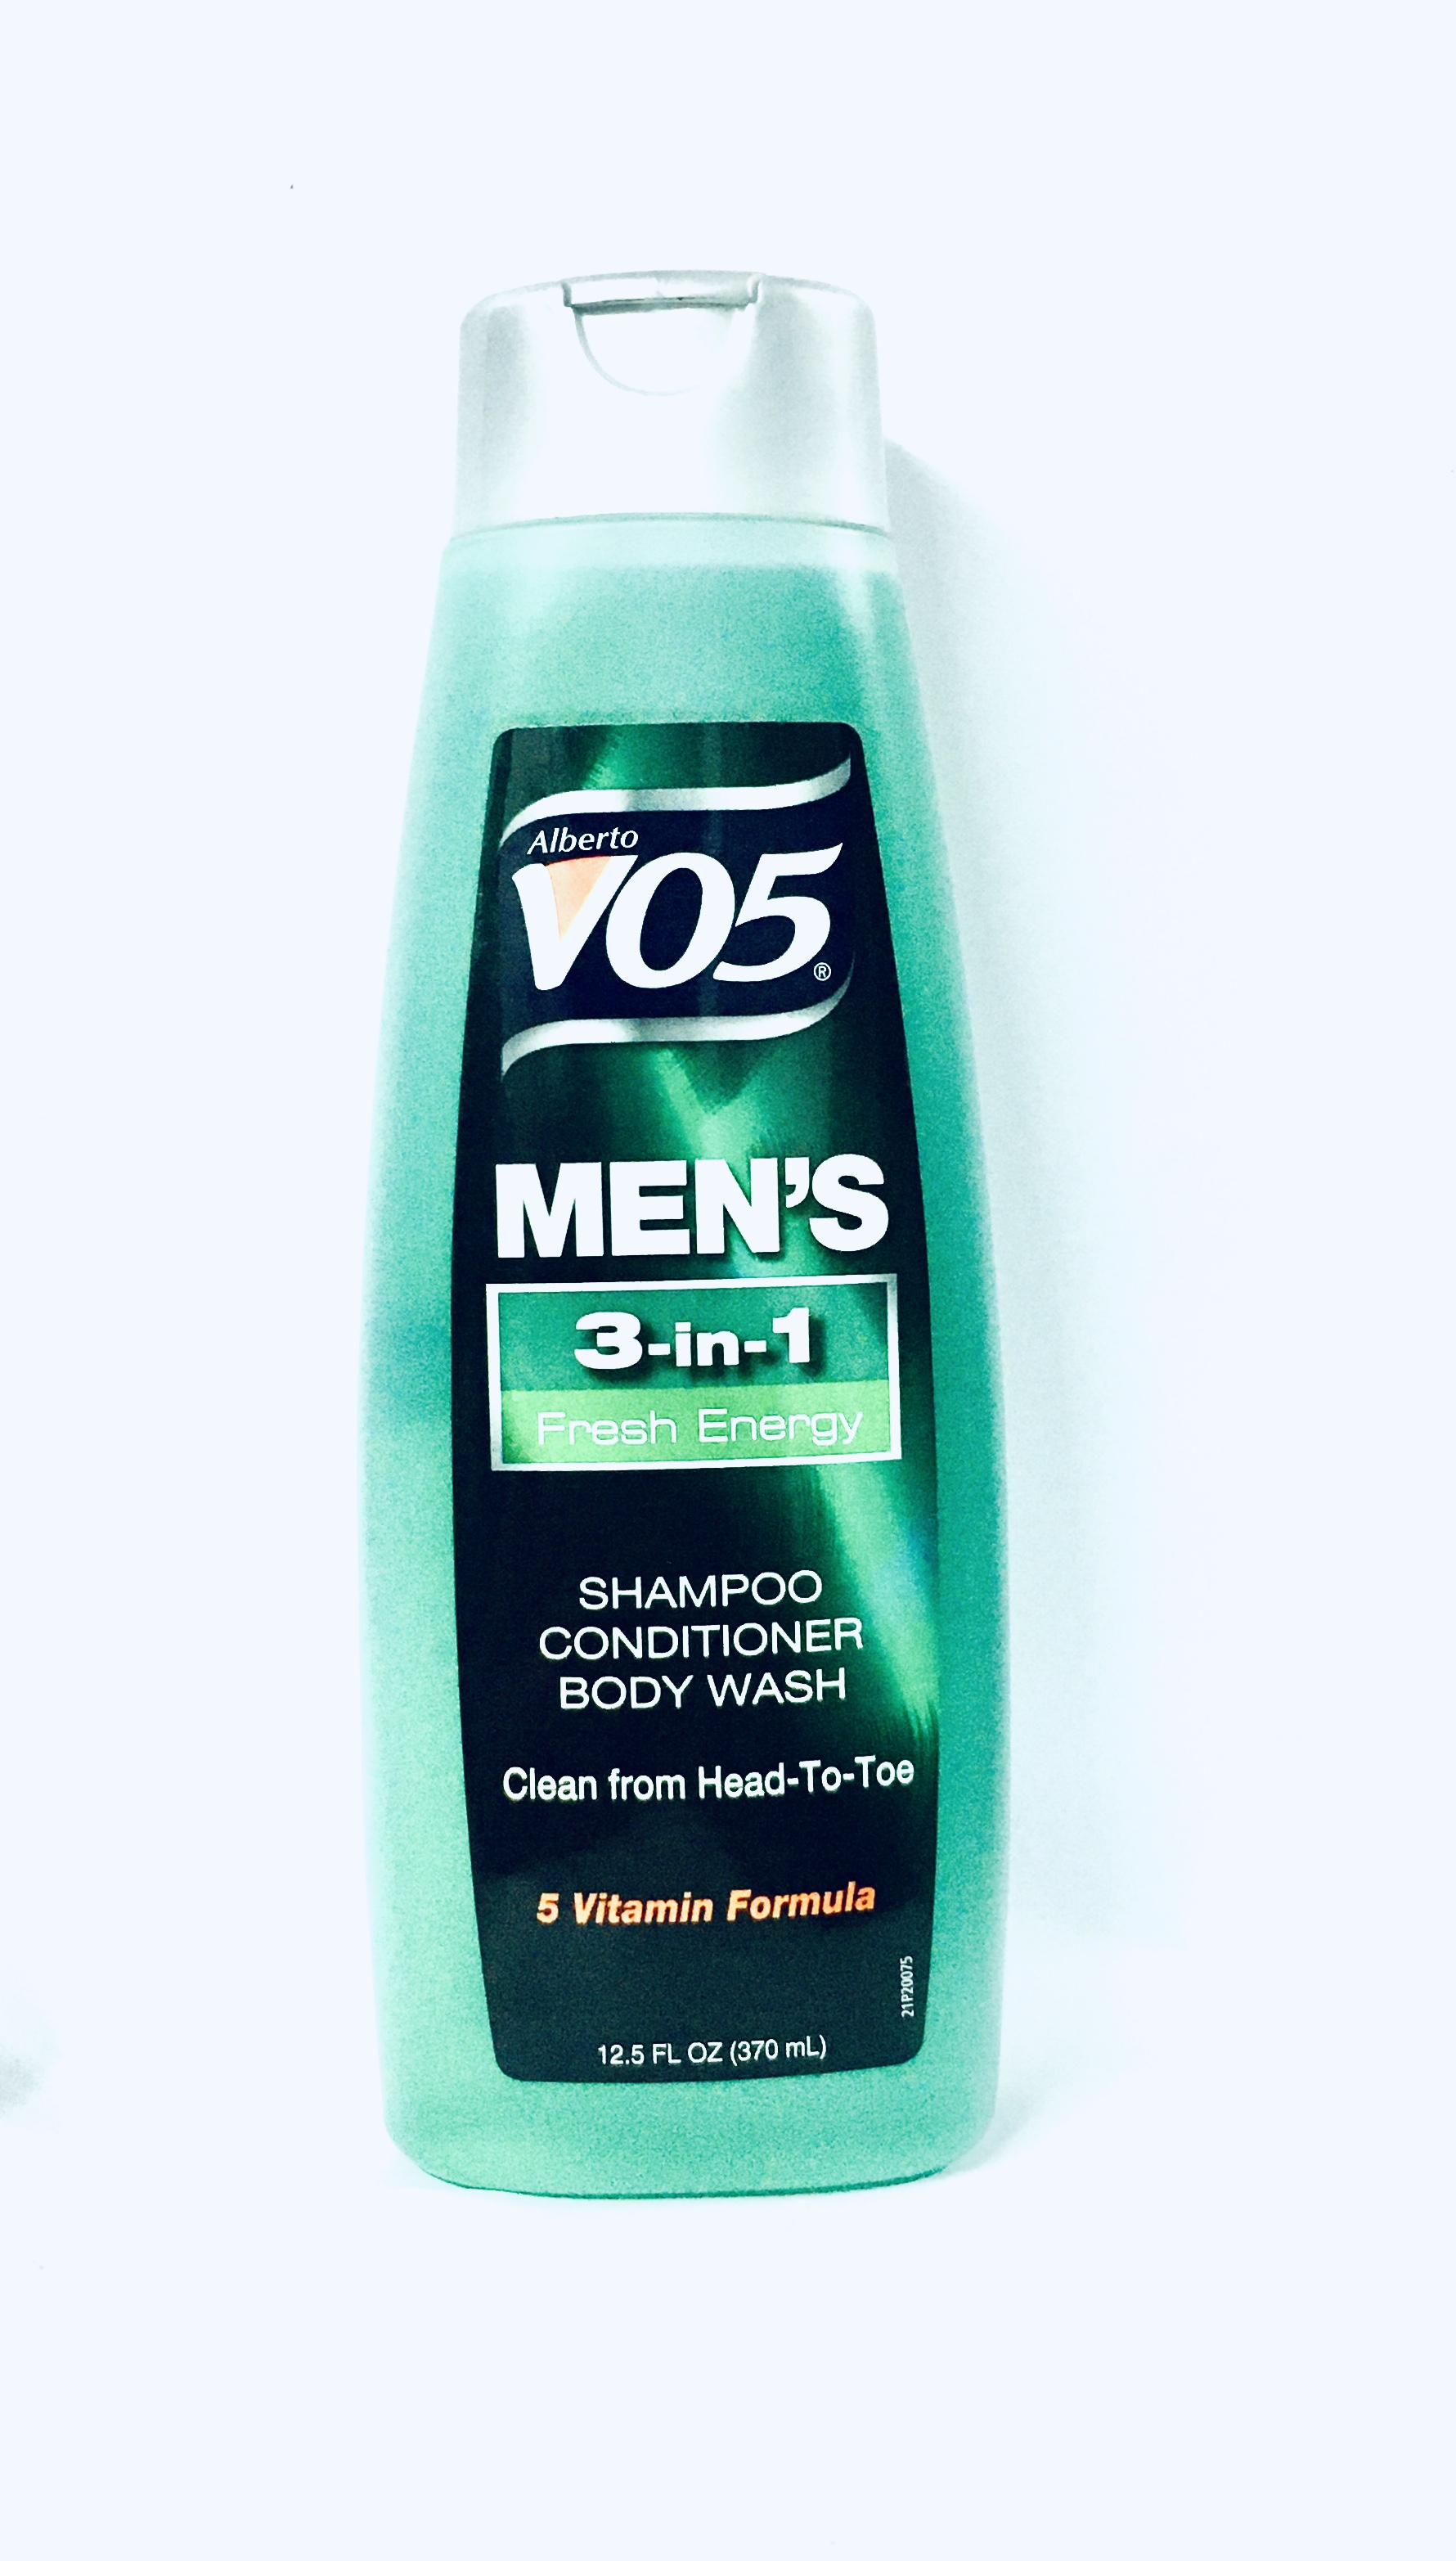 VO5 Men's 3 in 1 Fresh Energy ( Shampoo Conditioner body wash ) 12.5 Oz ...